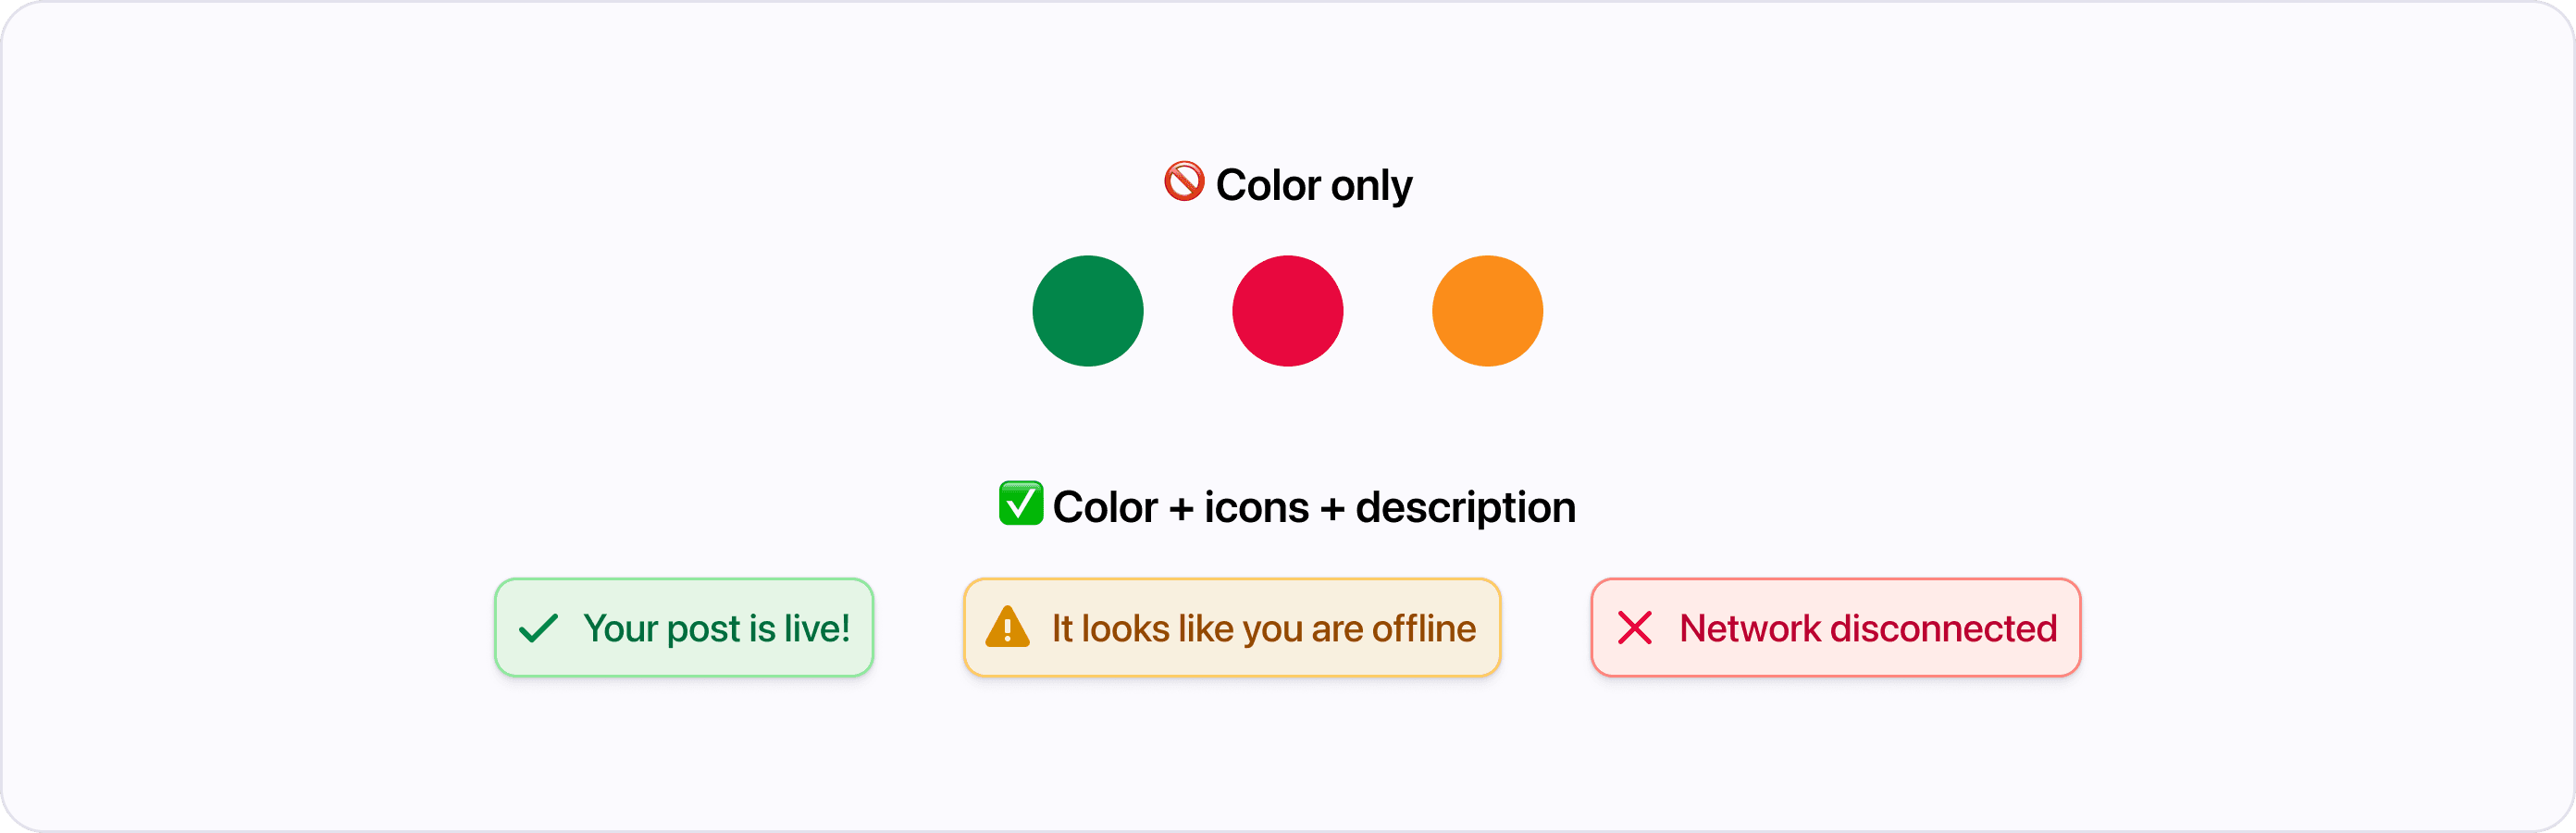 Provide Alternative Text Descriptions for Color-Dependent Content